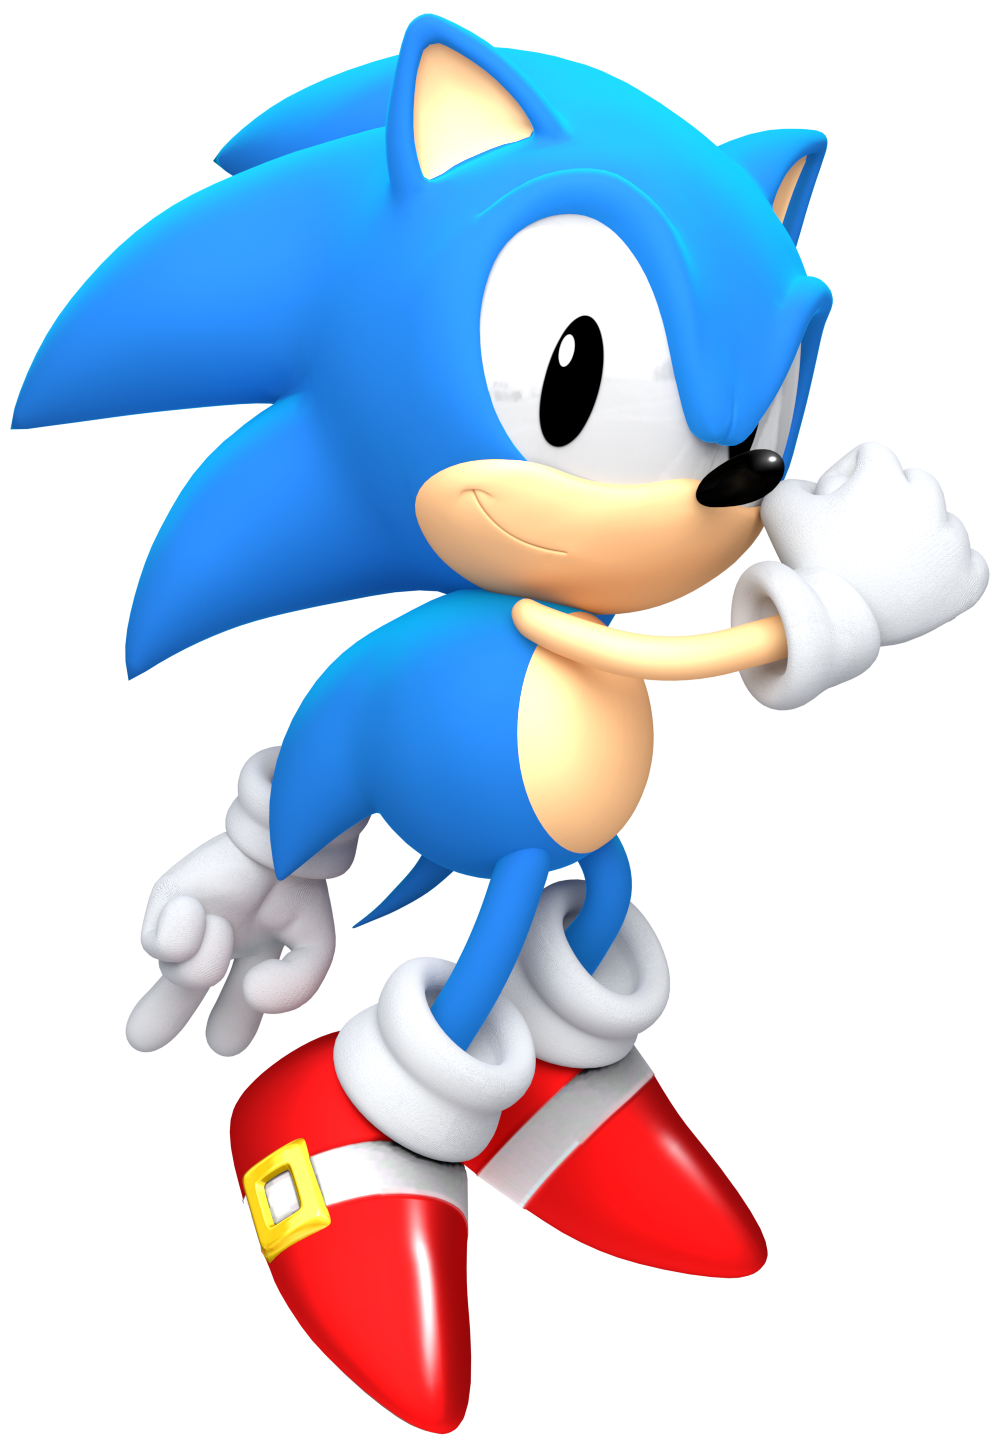 Classic Sonic 4k render by UsagiDood on DeviantArt